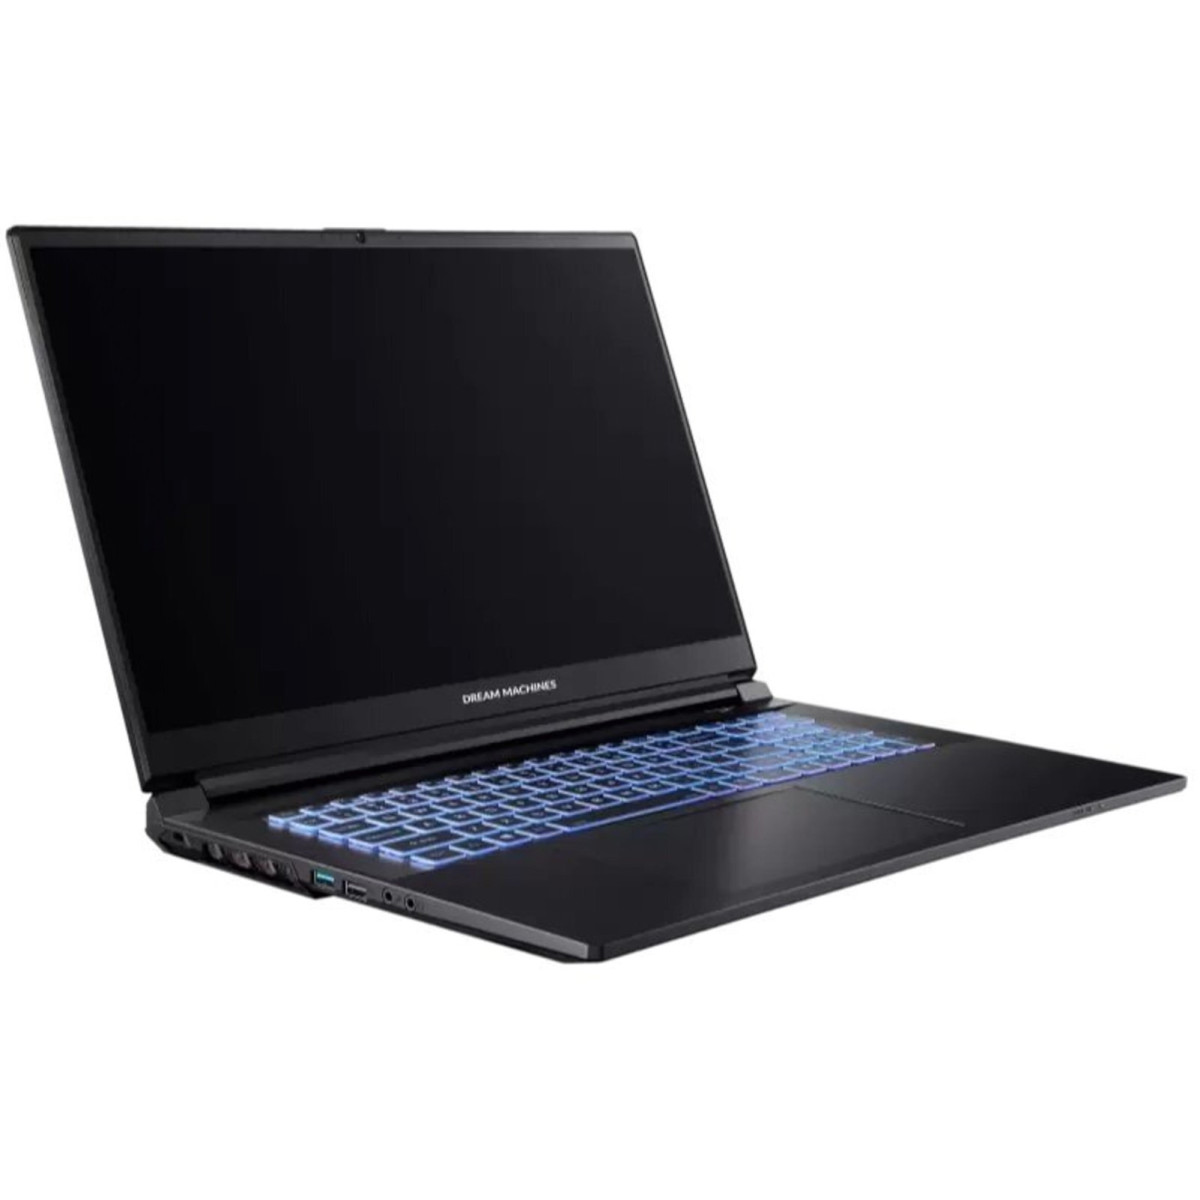 Ігровий ноутбук Dream Machines RG3050-17 Black (RG3050-17UA52)